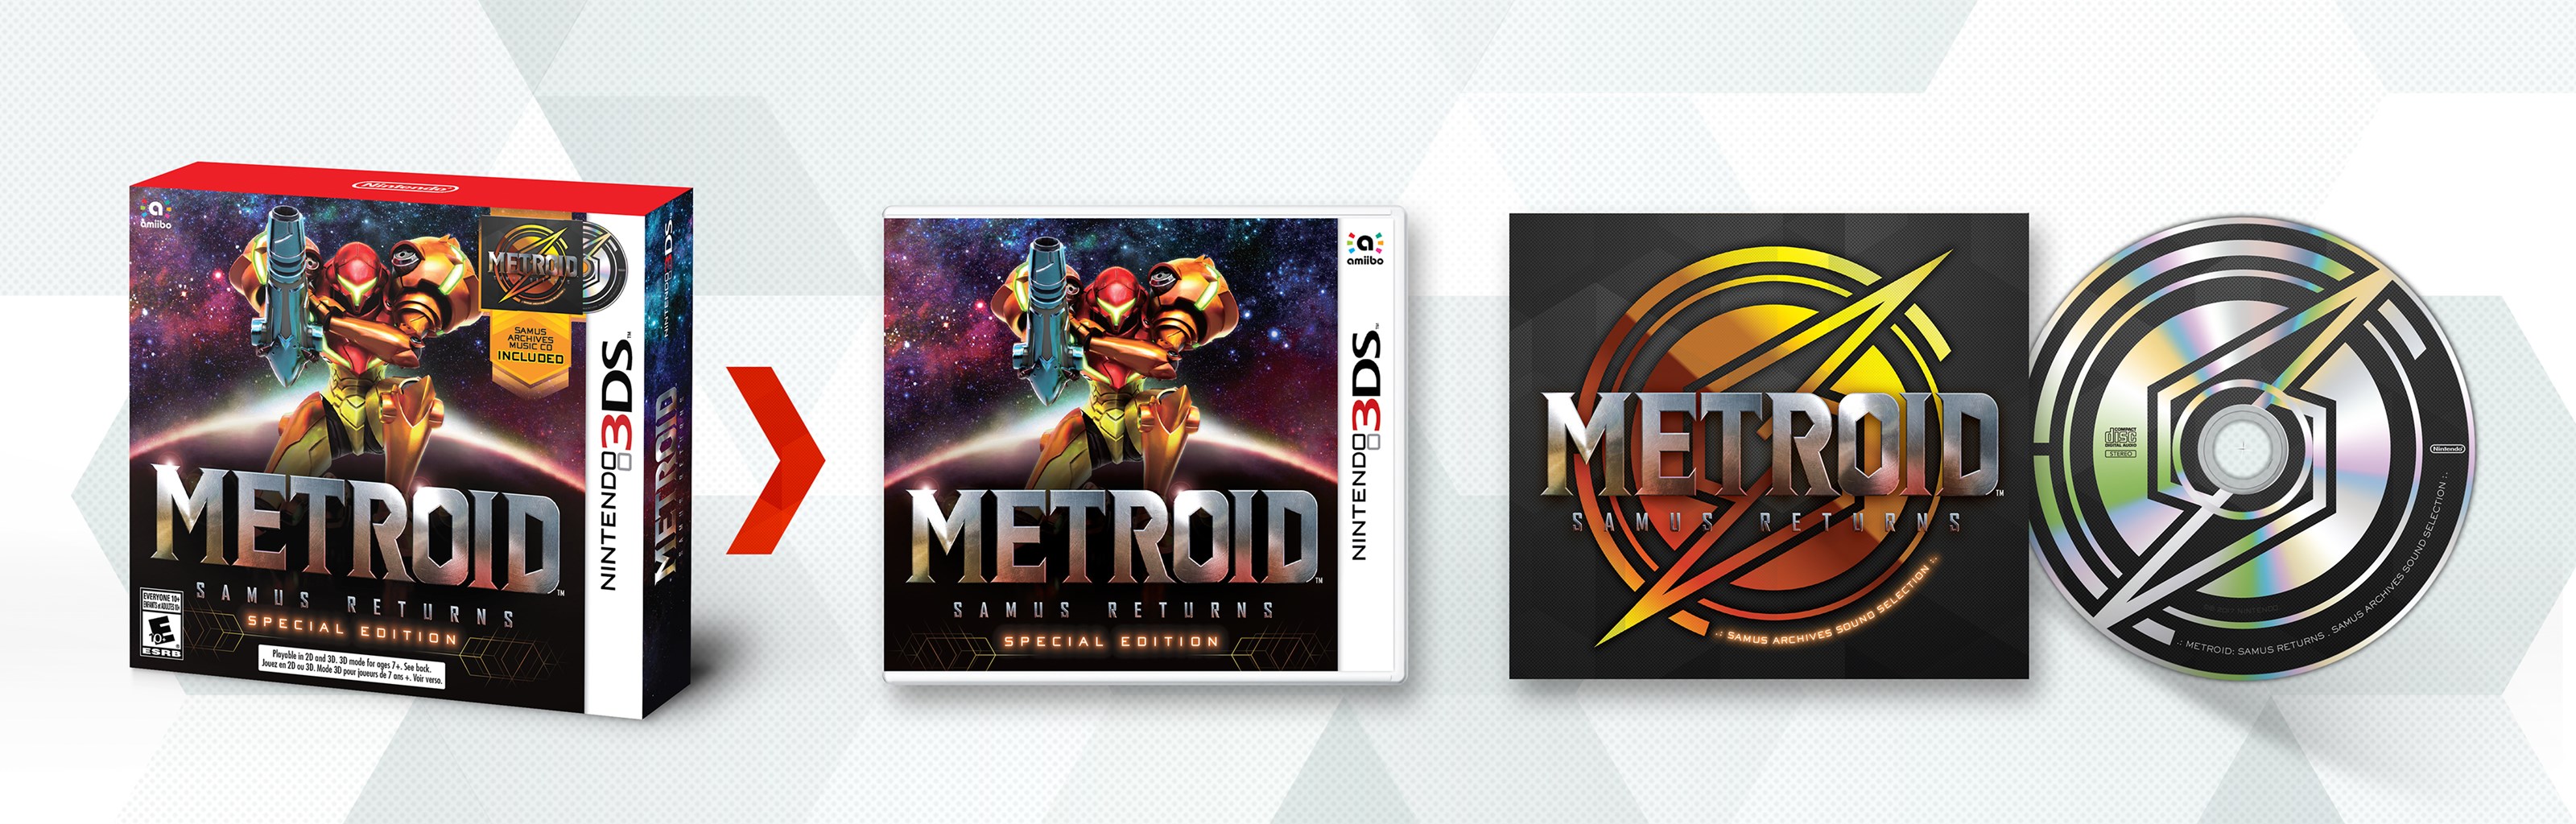 Metroid: Samus Returns Special Edition (Nintendo 3DS) - image 2 of 12